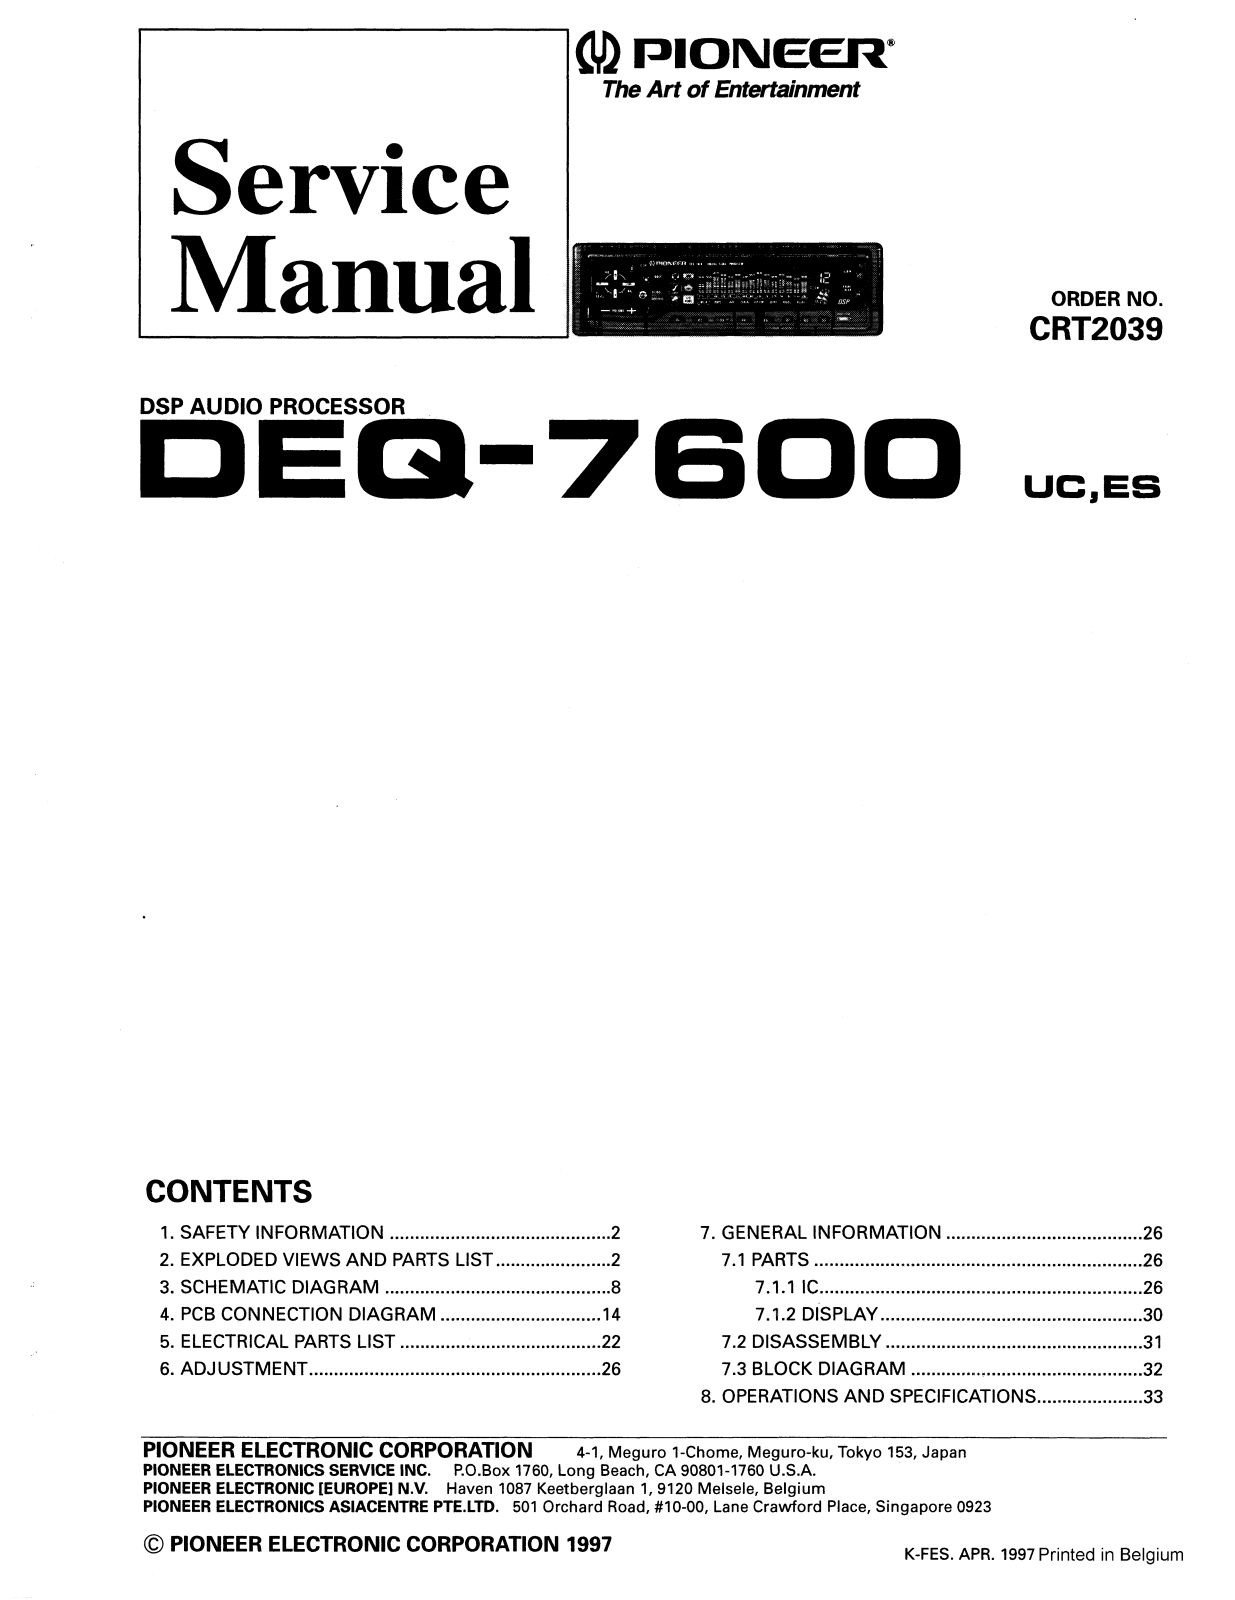 Pioneer DEQ-7600 Service manual